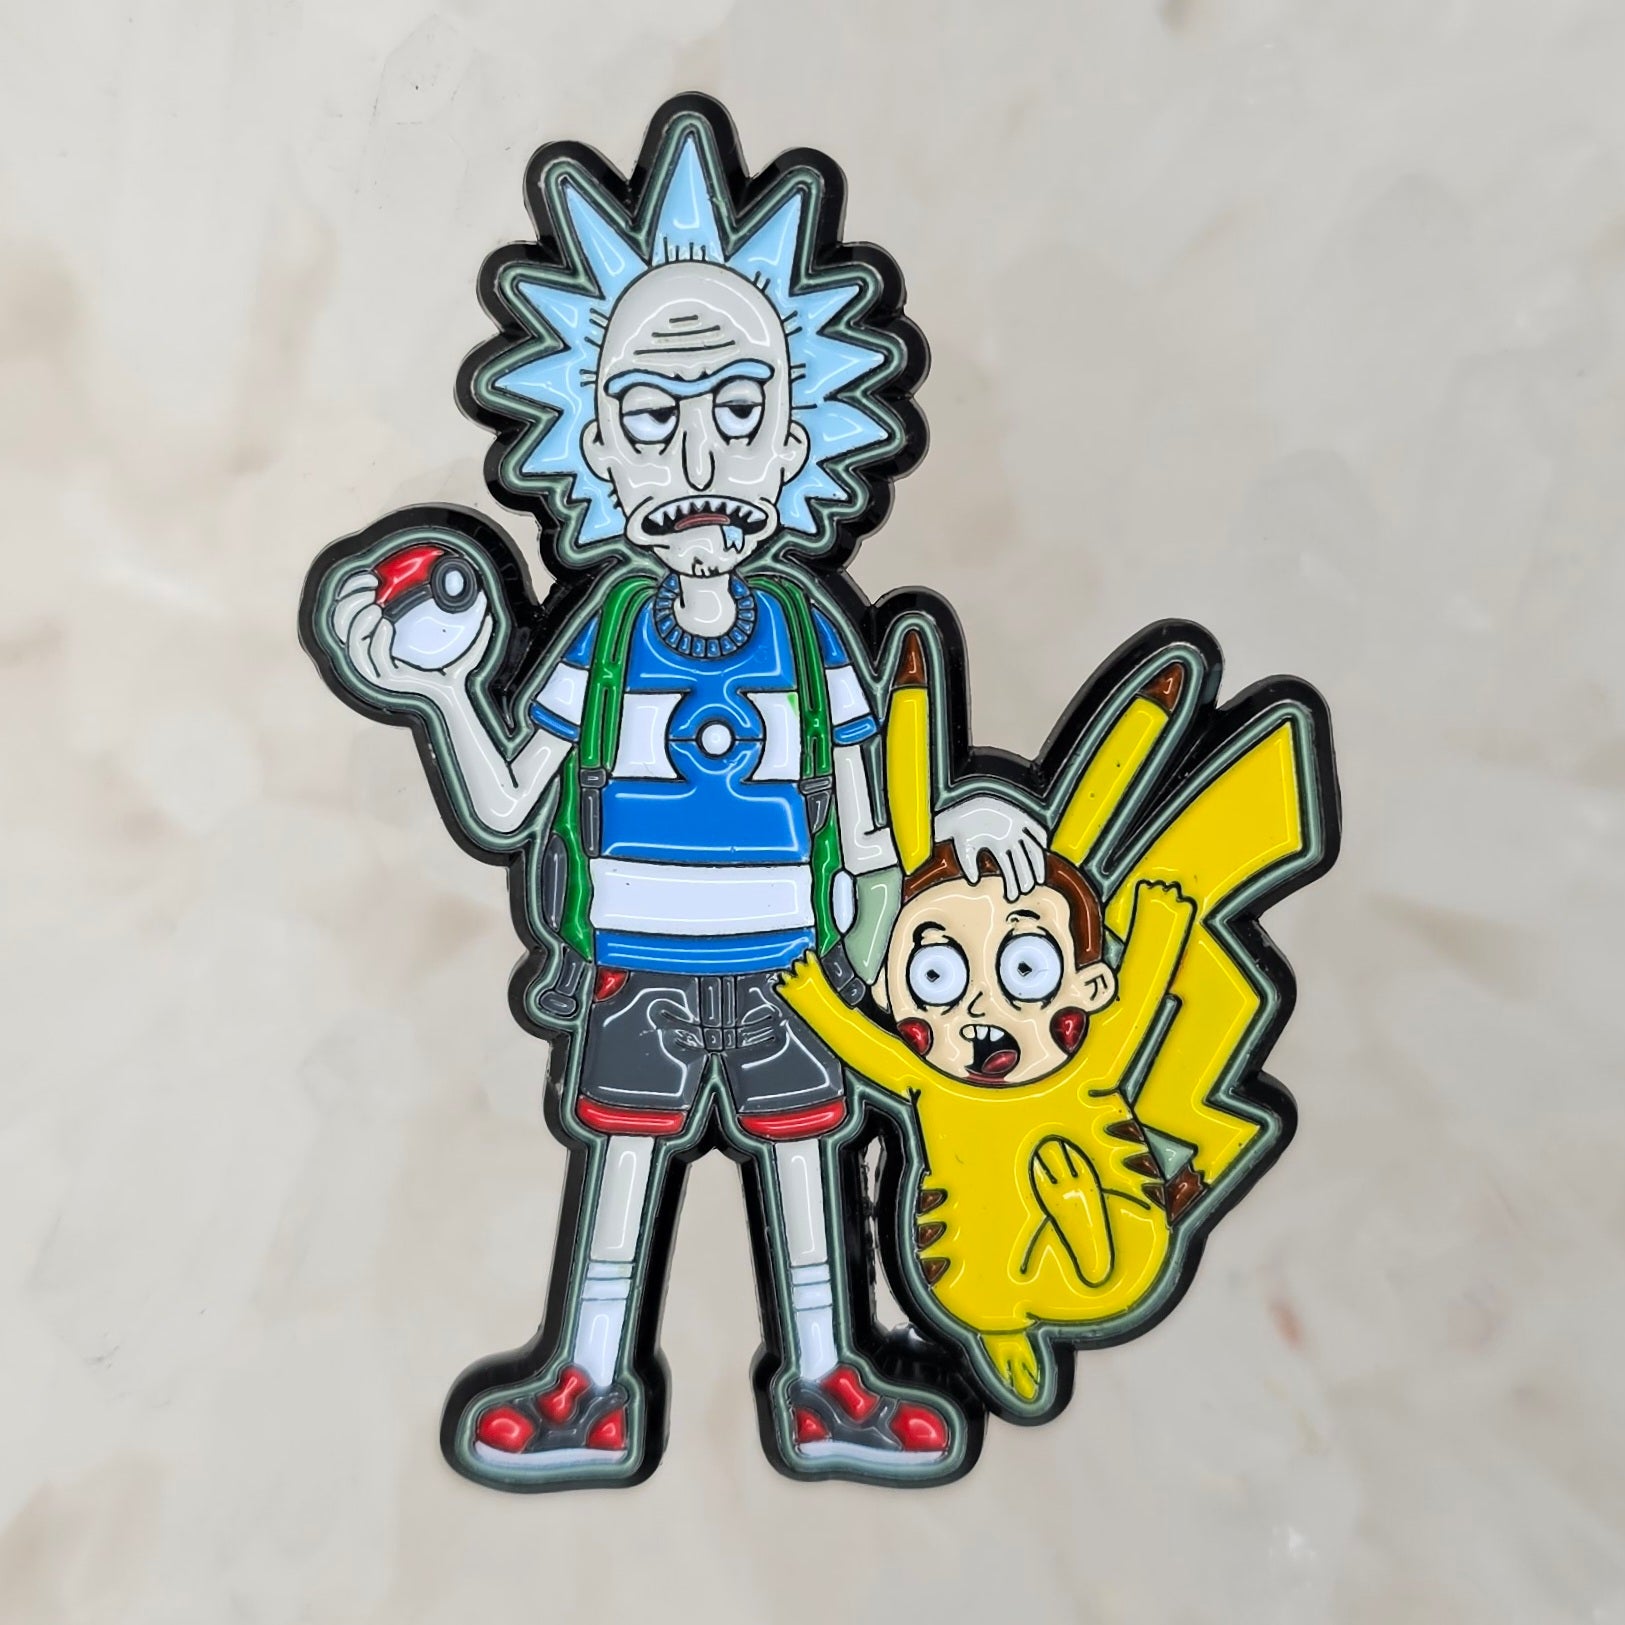 Rick Ash &amp; Pikachu Morty Video Game 90s Cartoon Enamel Pins Hat Pins Lapel Pin Brooch Badge Festival Pin